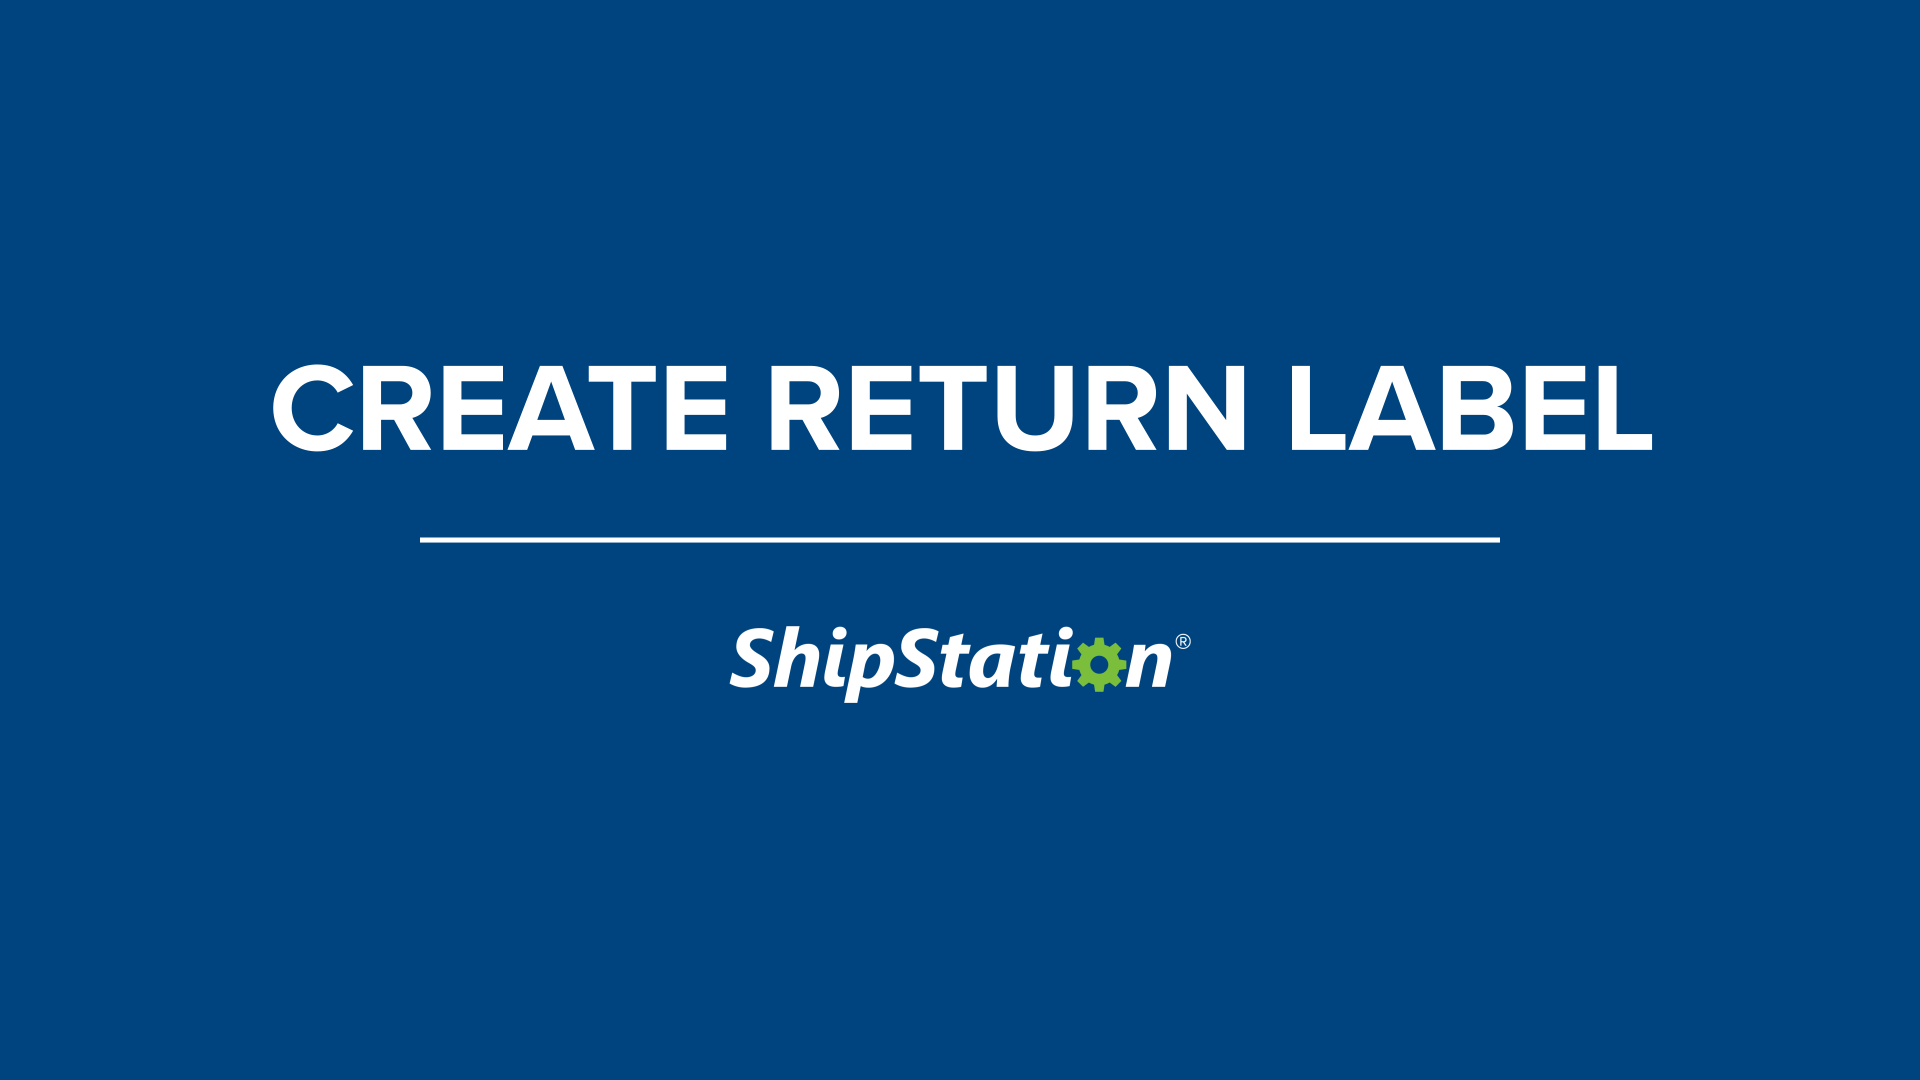 30 Shipstation Create Return Label Label Design Ideas 0586